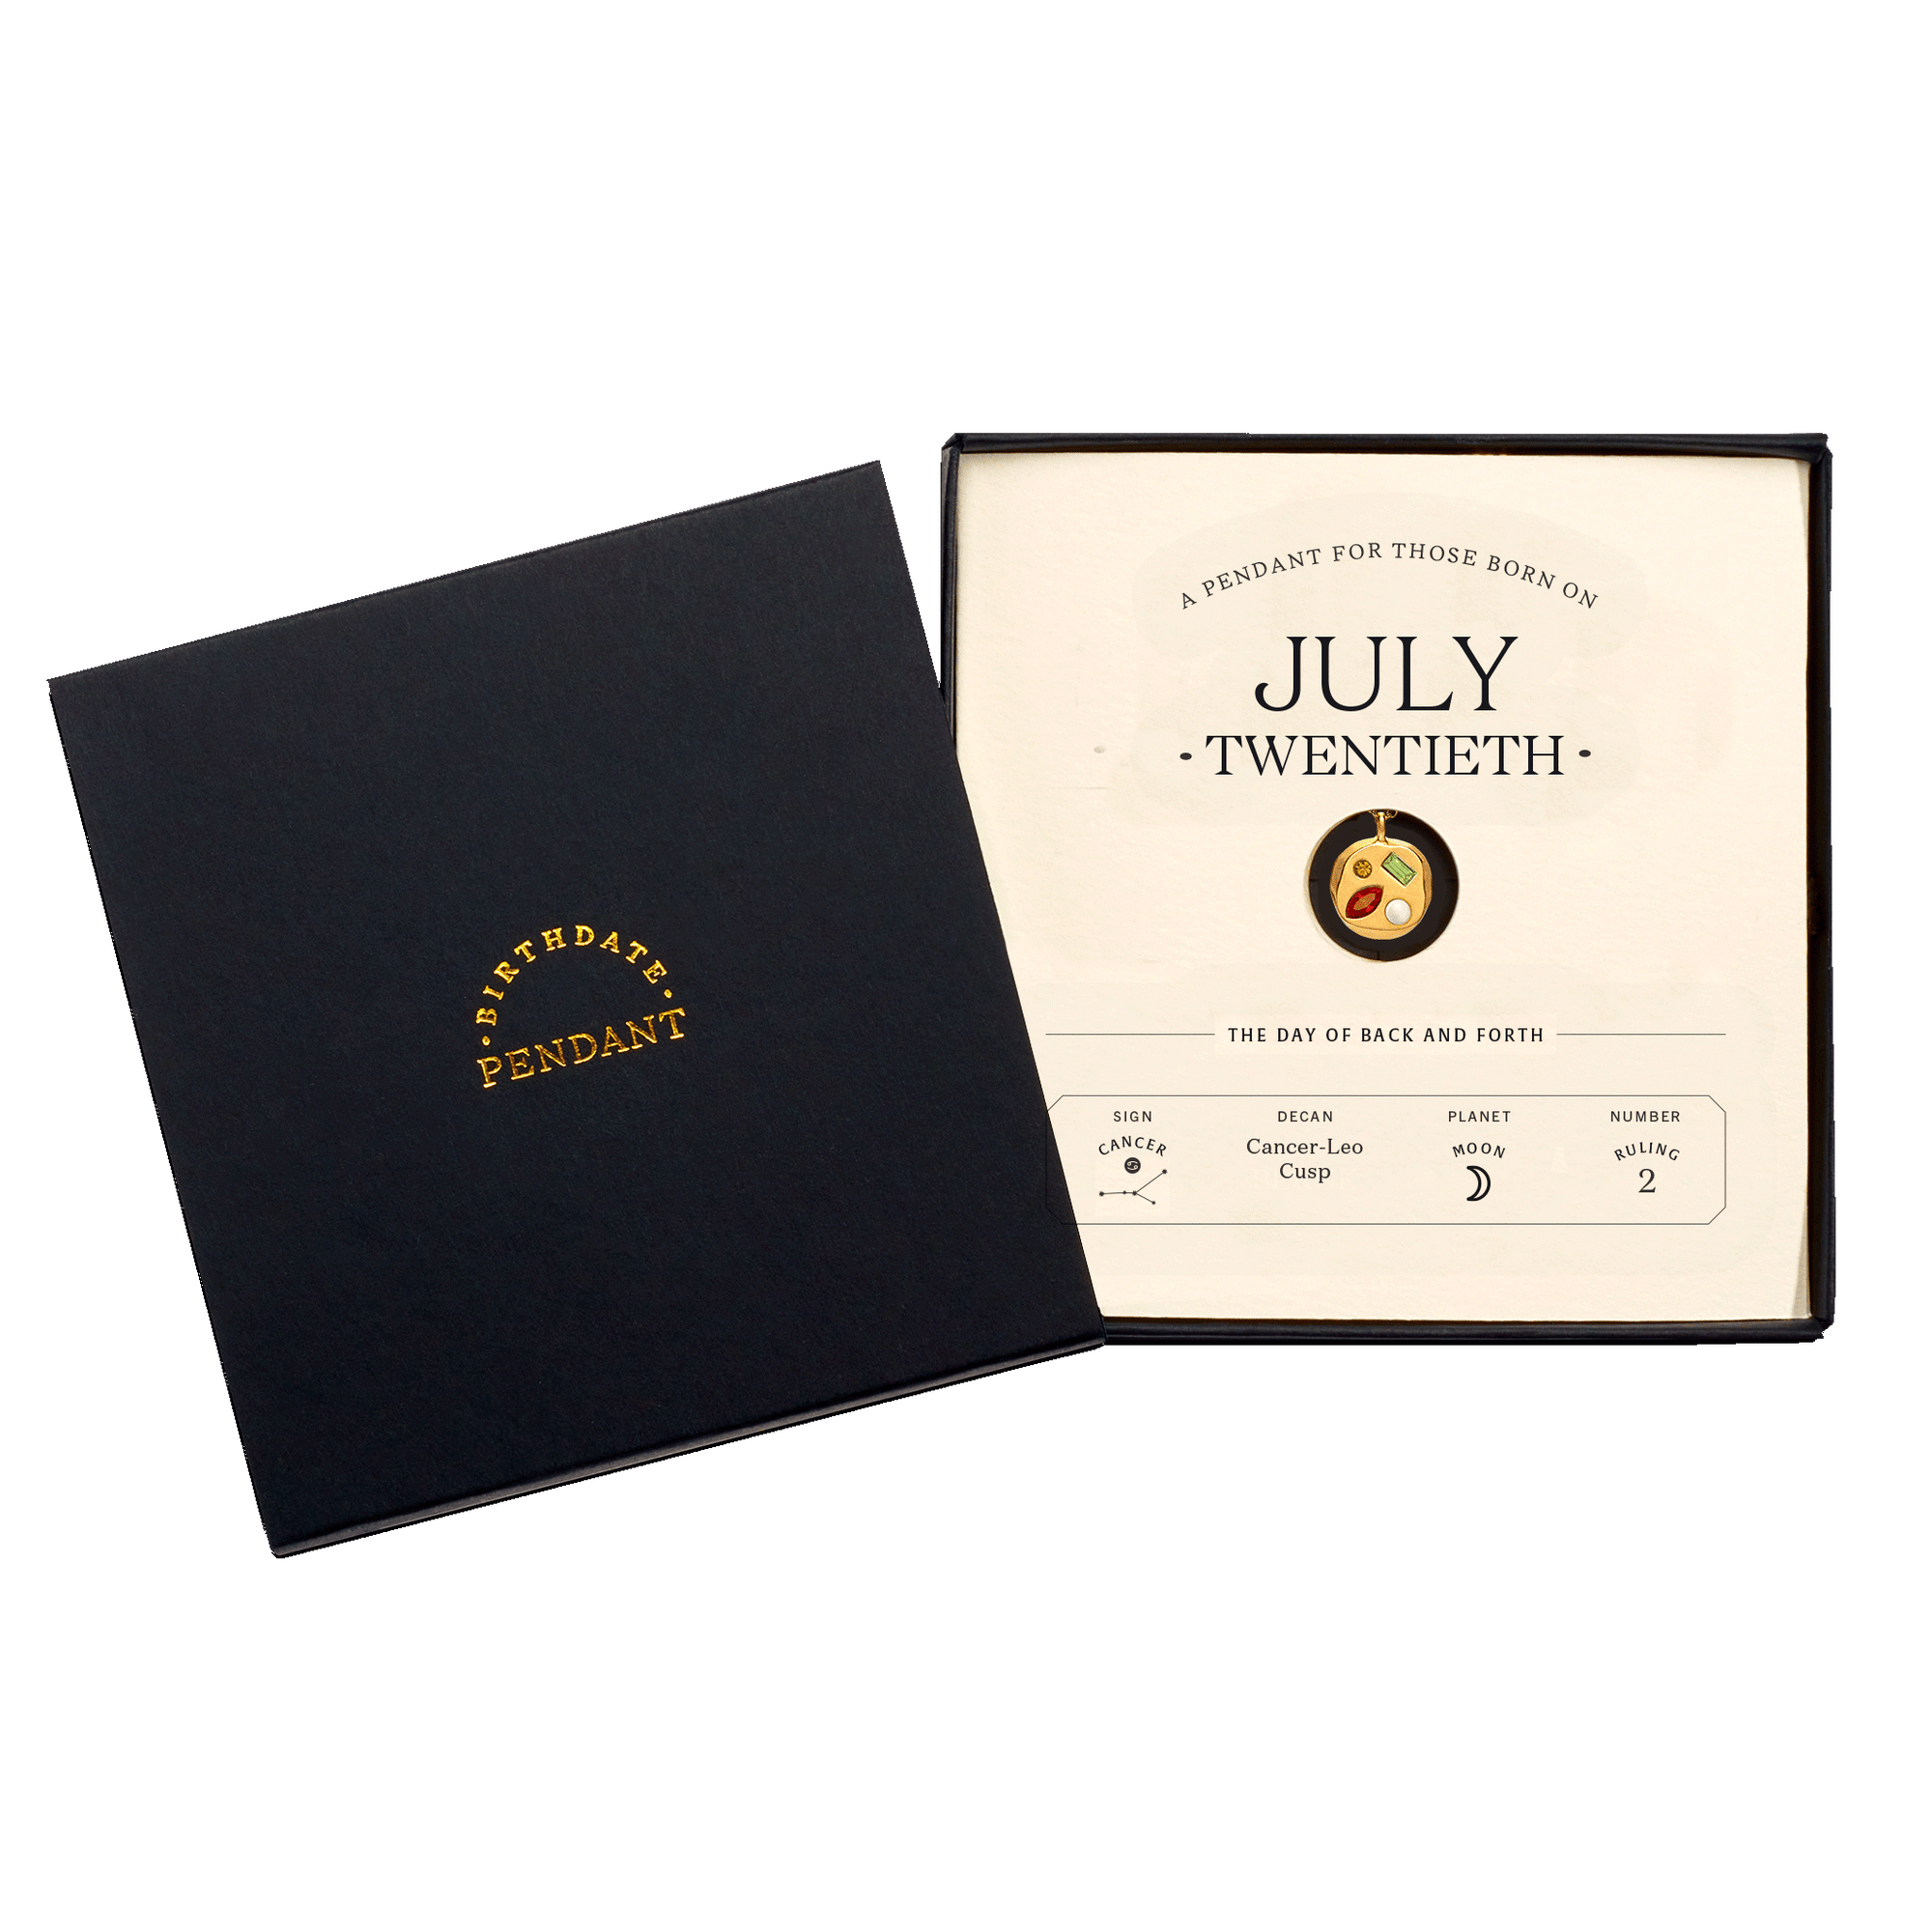 The July Twentieth Pendant inside its box